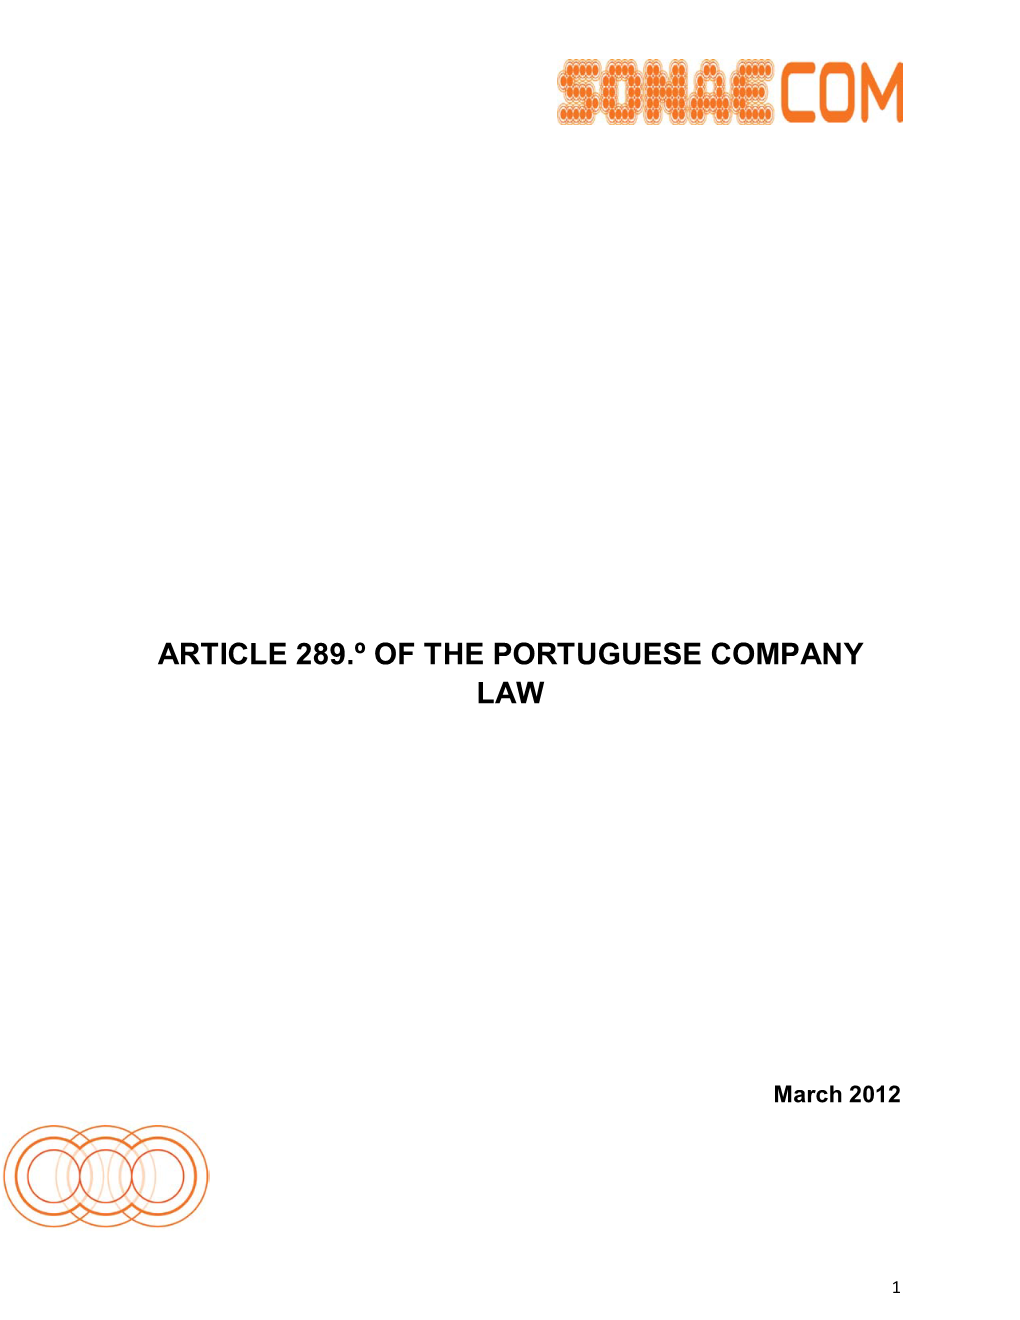 Article 289.º of the Portuguese Company Law